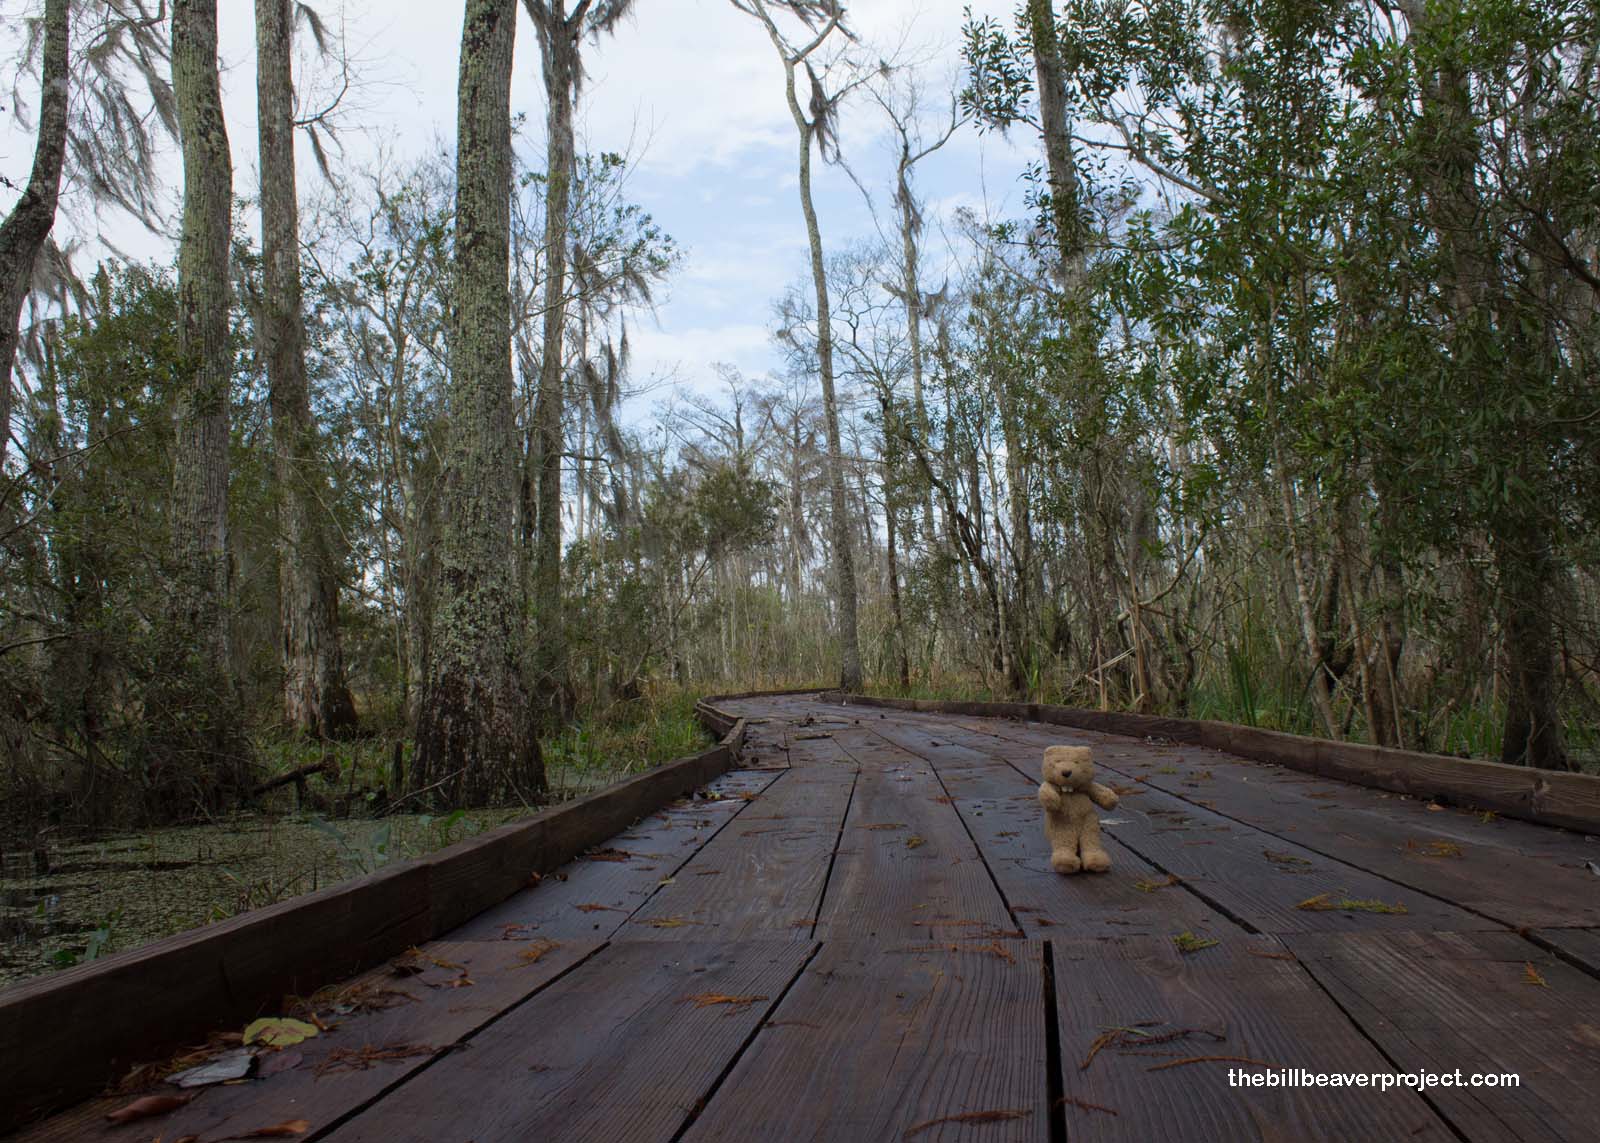 The Barataria Preserve has neat boardwalks that take you through the bayou!